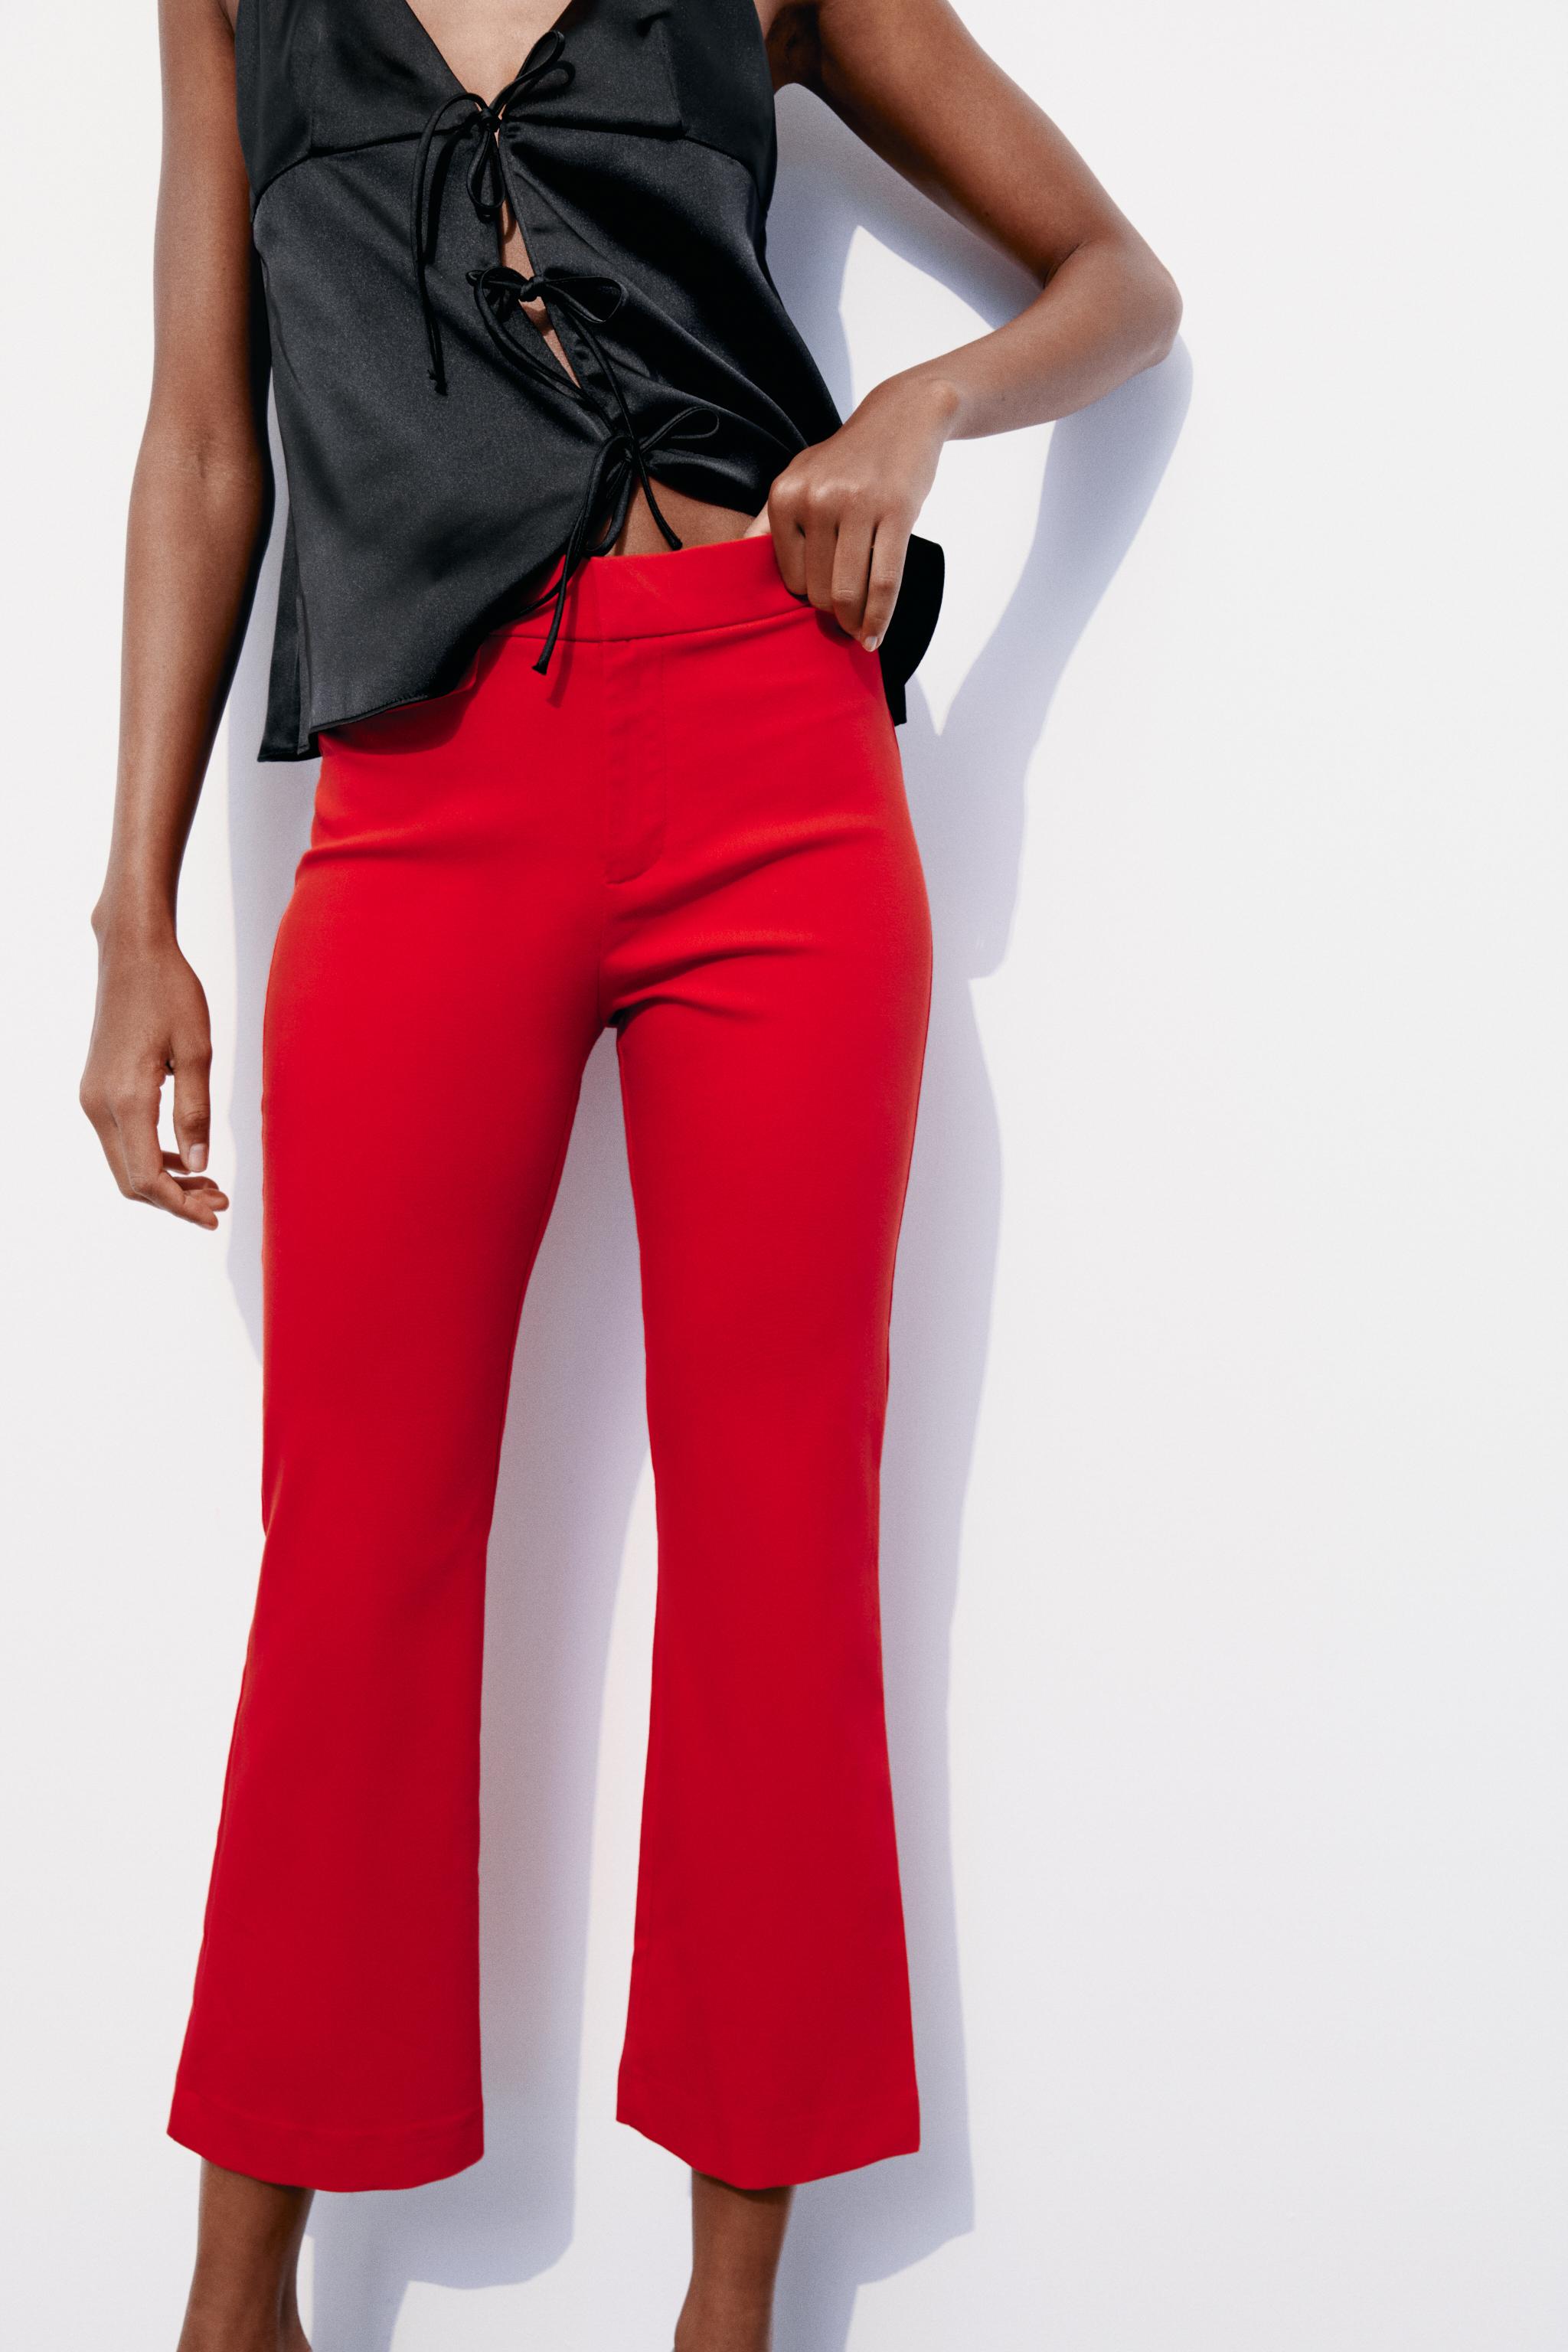 ZARA NWT RED GINGHAM MINI FLARE PANTS Size XS - $48 New